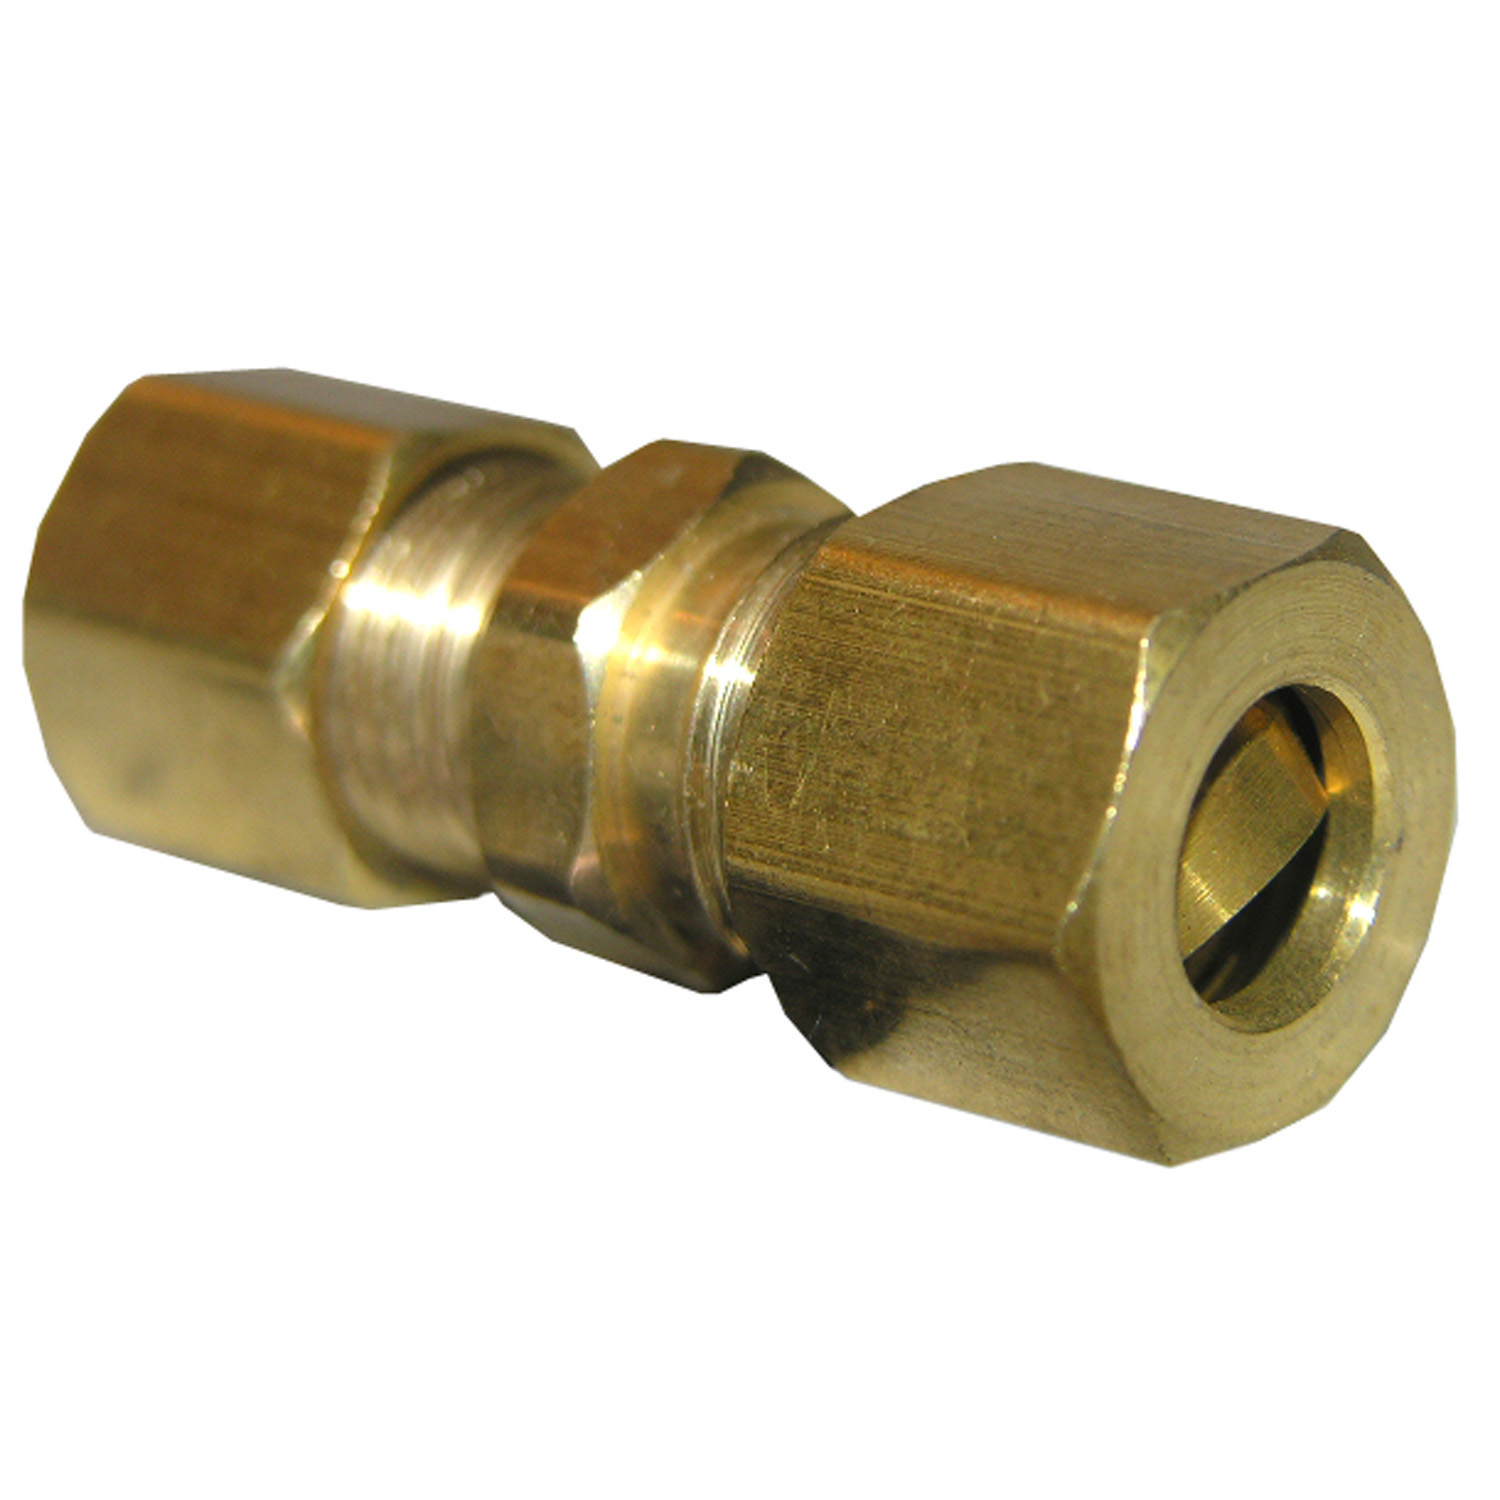 17-6219 Reducing Pipe Union, 5/16 x 1/4 in, Compression, Brass, 150 psi Pressure